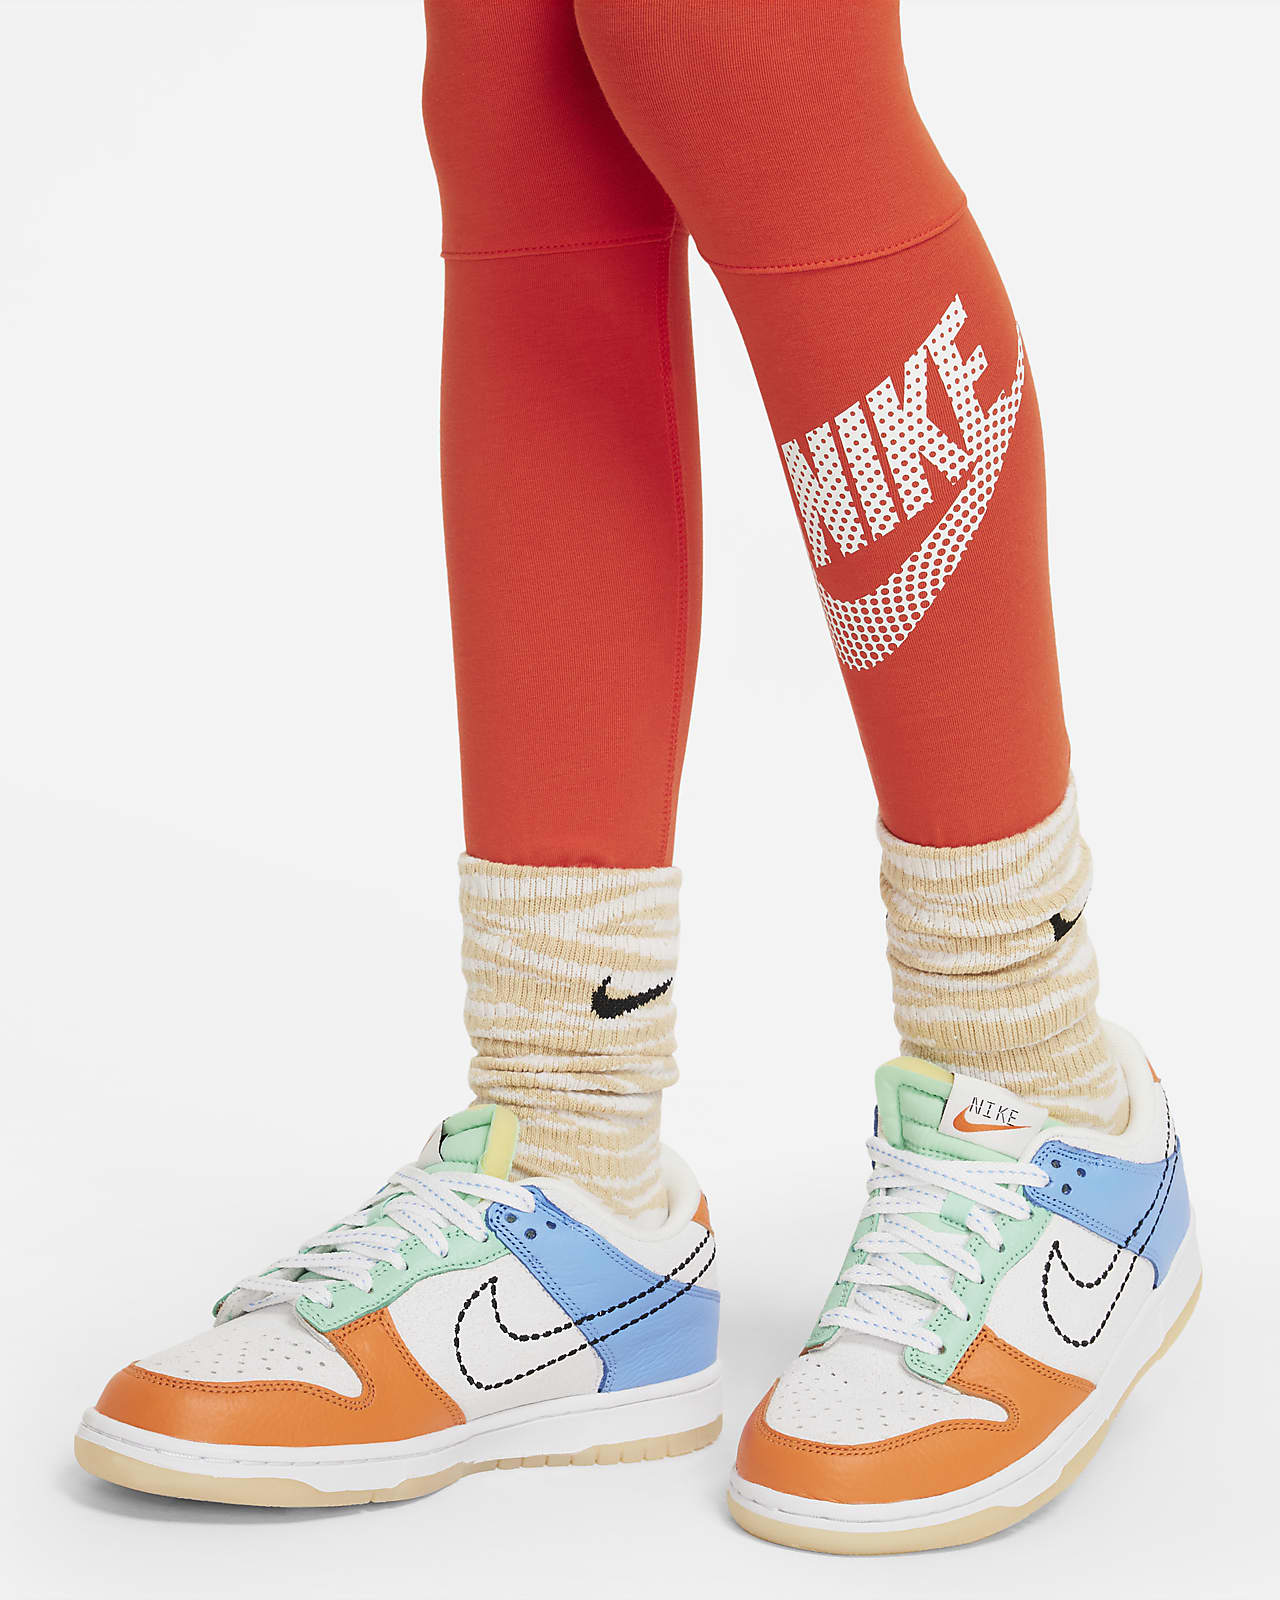 Nike Sportswear Favorites Leggings de talle alto para - Niña. Nike